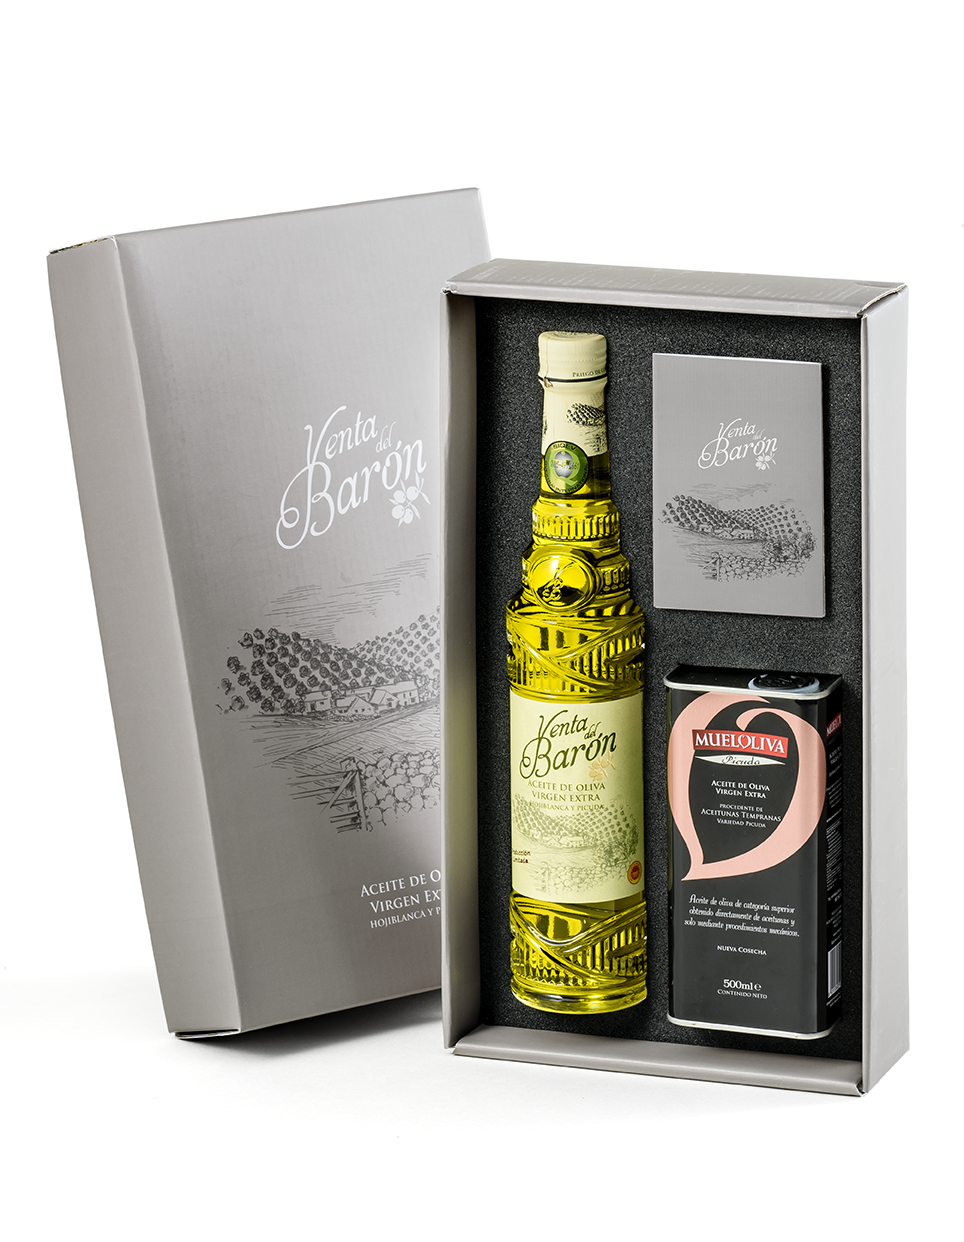 Spanish olive oil gift set: Venta del Barón extra virgin olive oil and Mueloliva Picuda olive oil